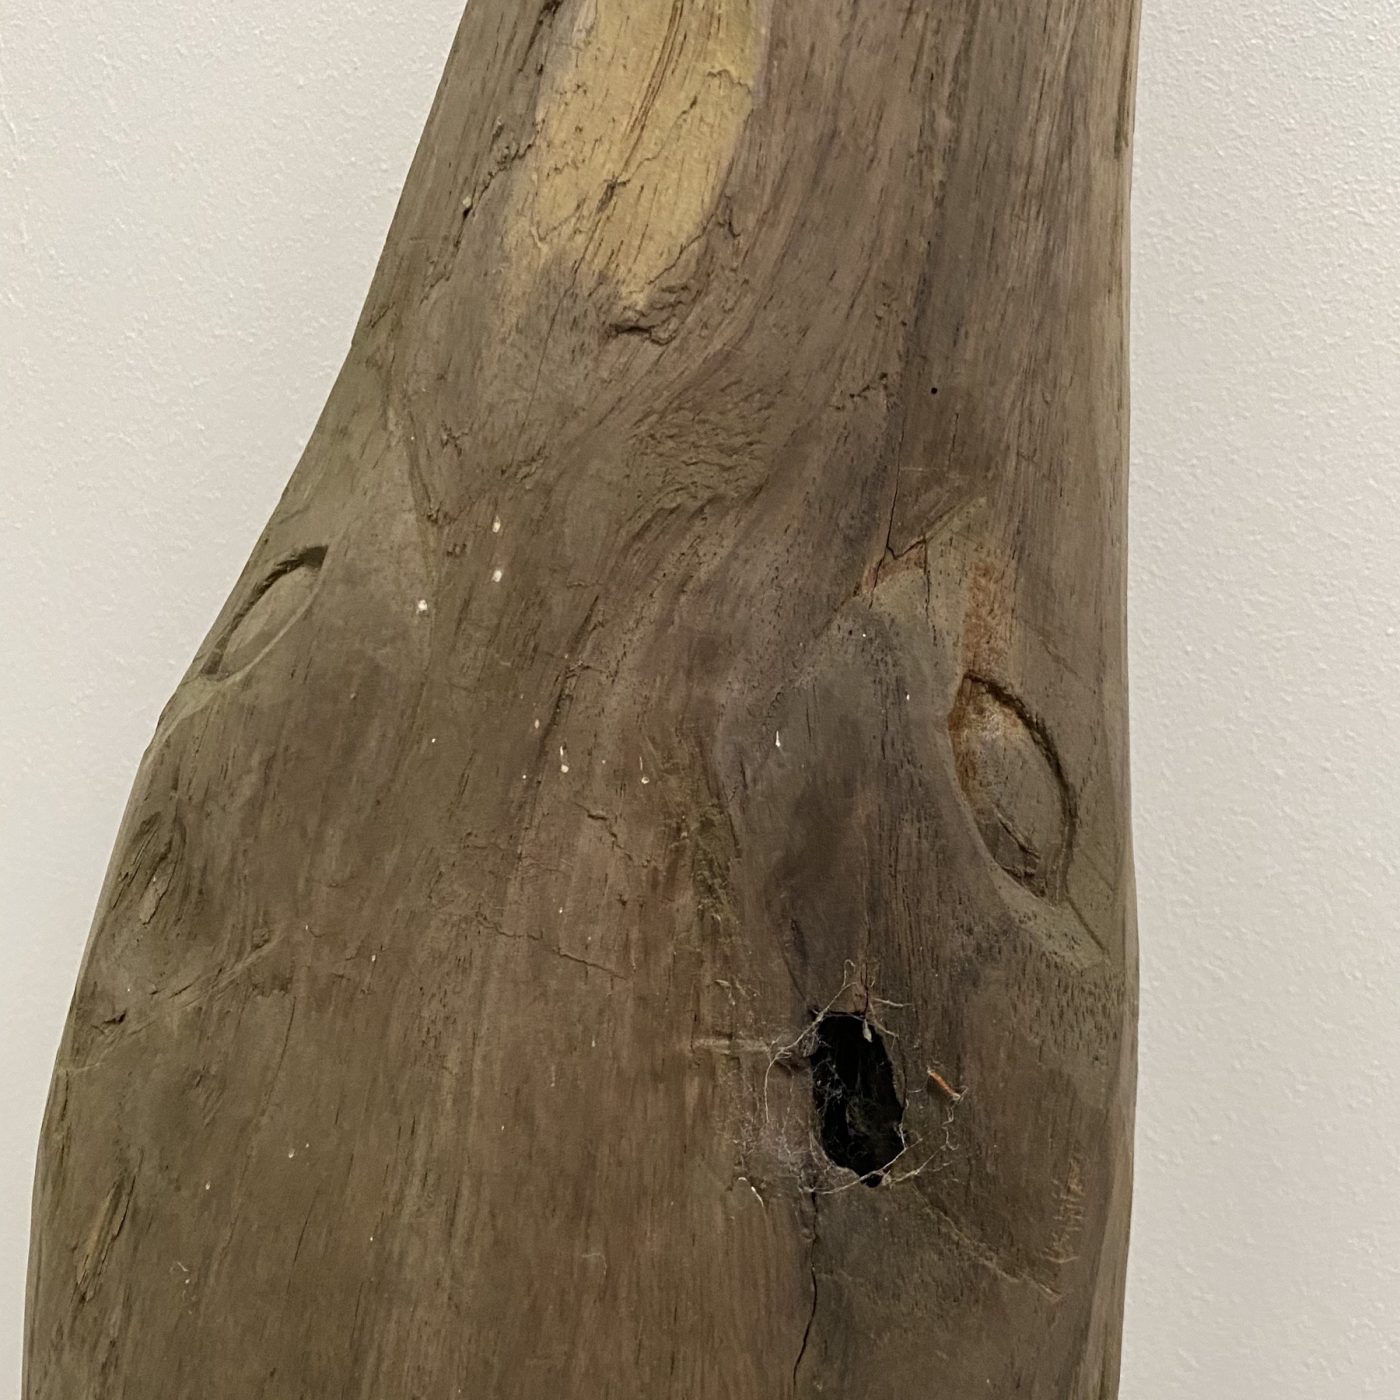 objet-vagabond-wooden-sculpture0001